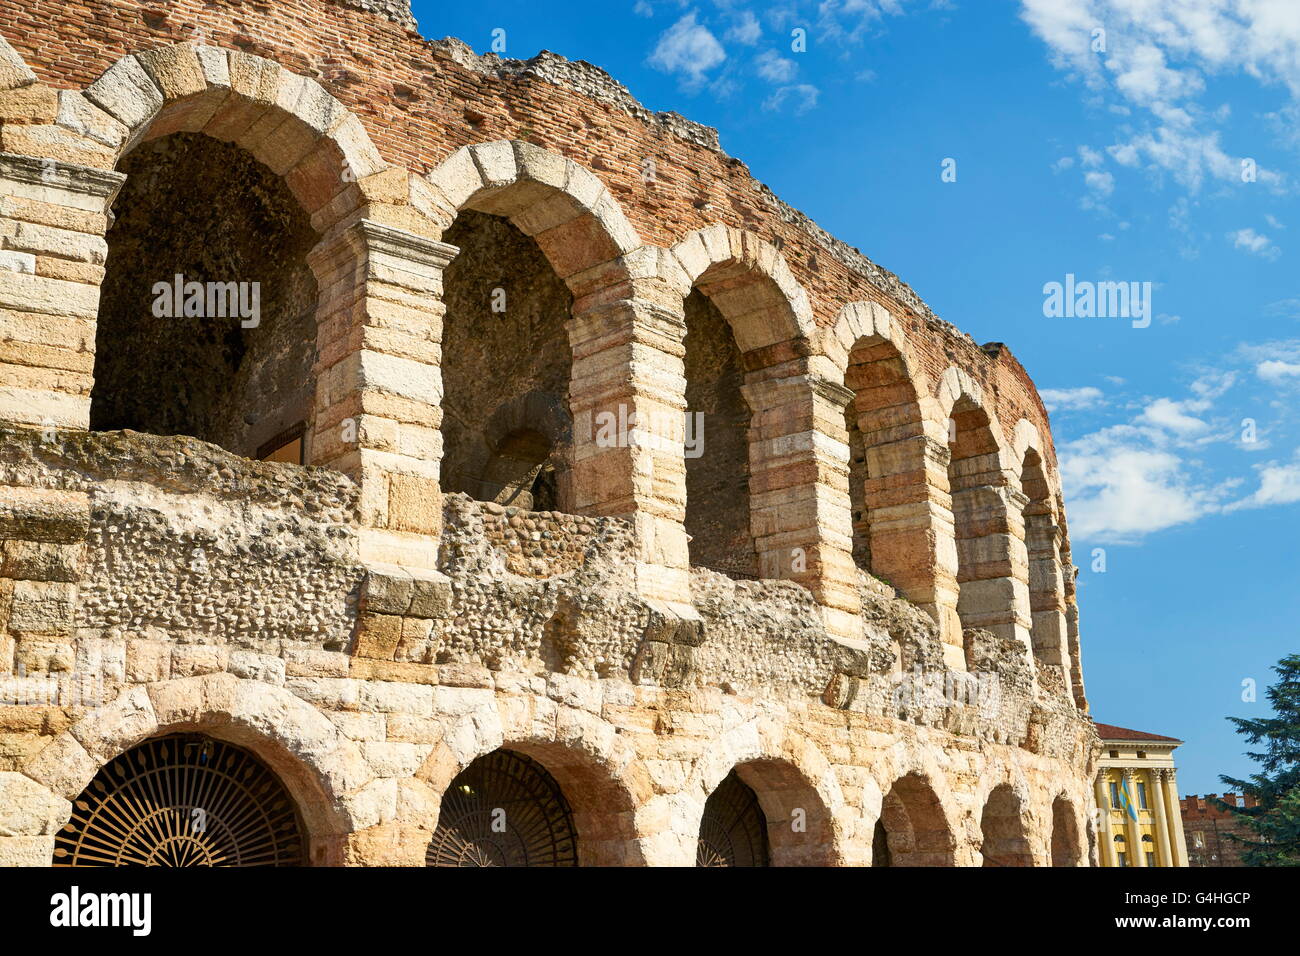 The Arena (amphiteatre), Piazza Bra, Verona old town, Veneto region, Italy Stock Photo